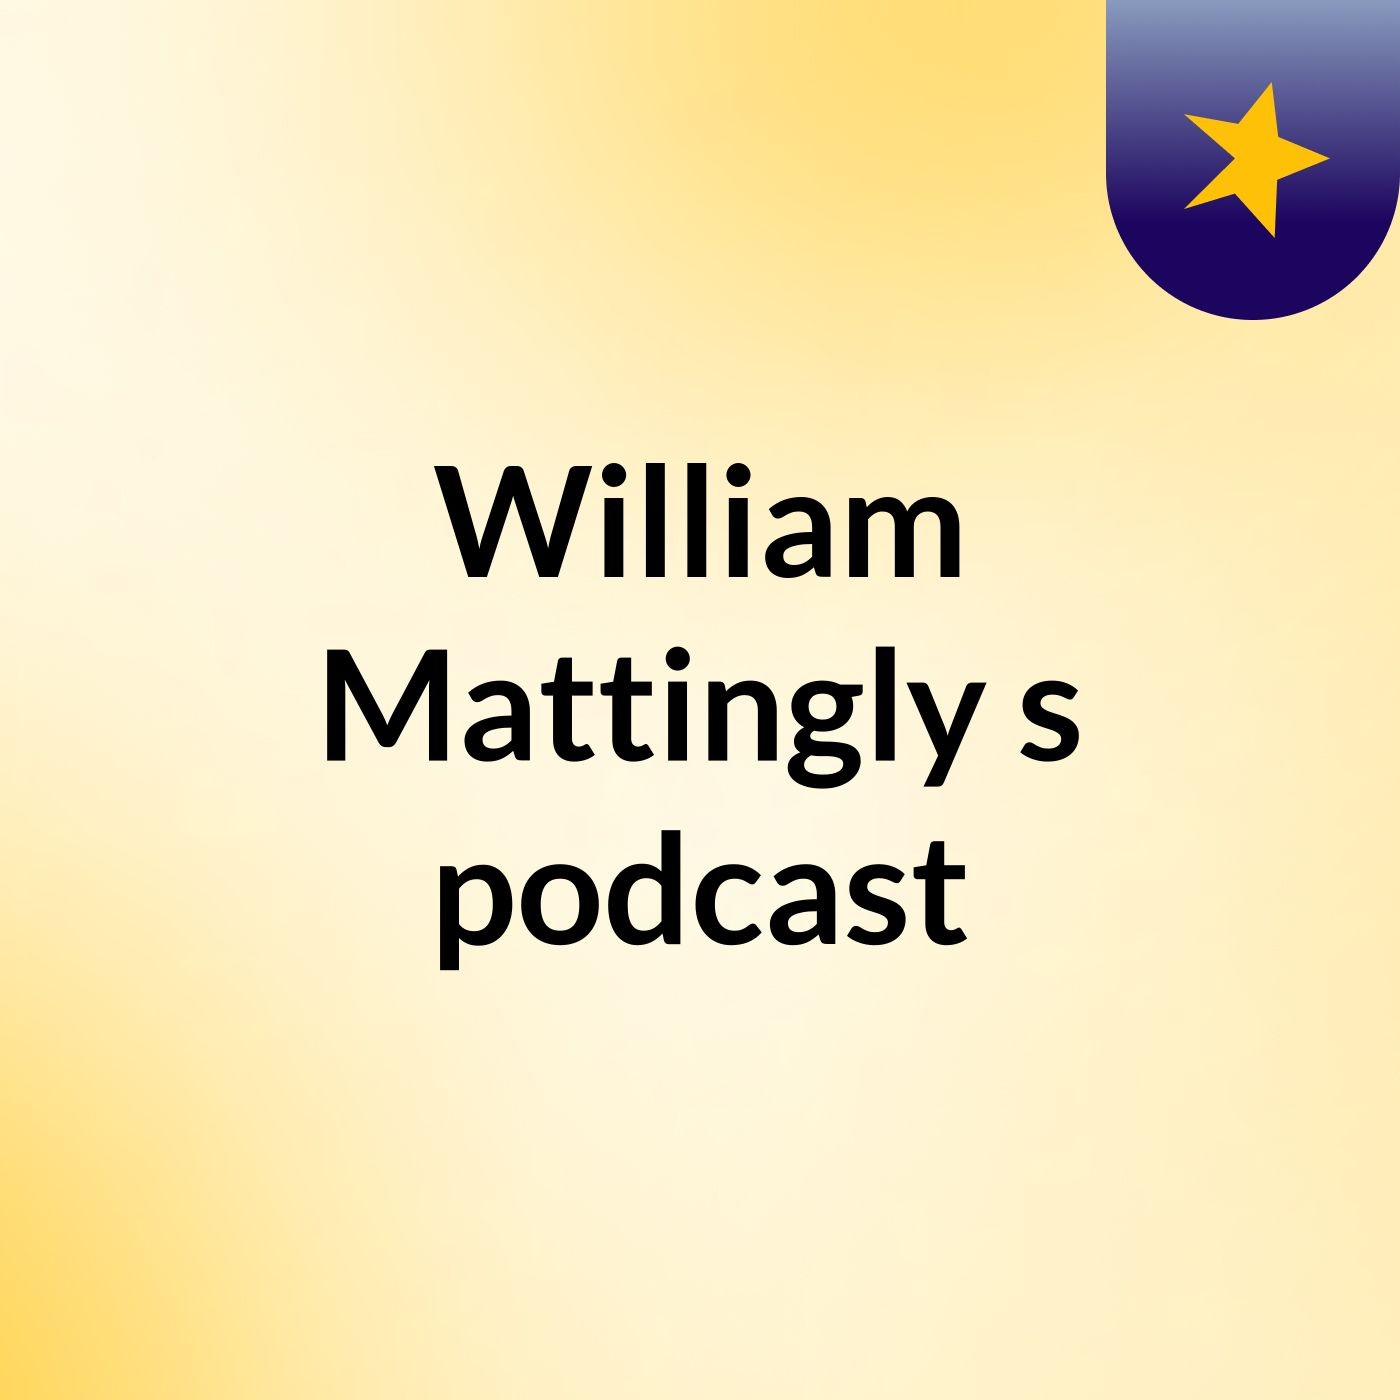 William Mattingly's podcast